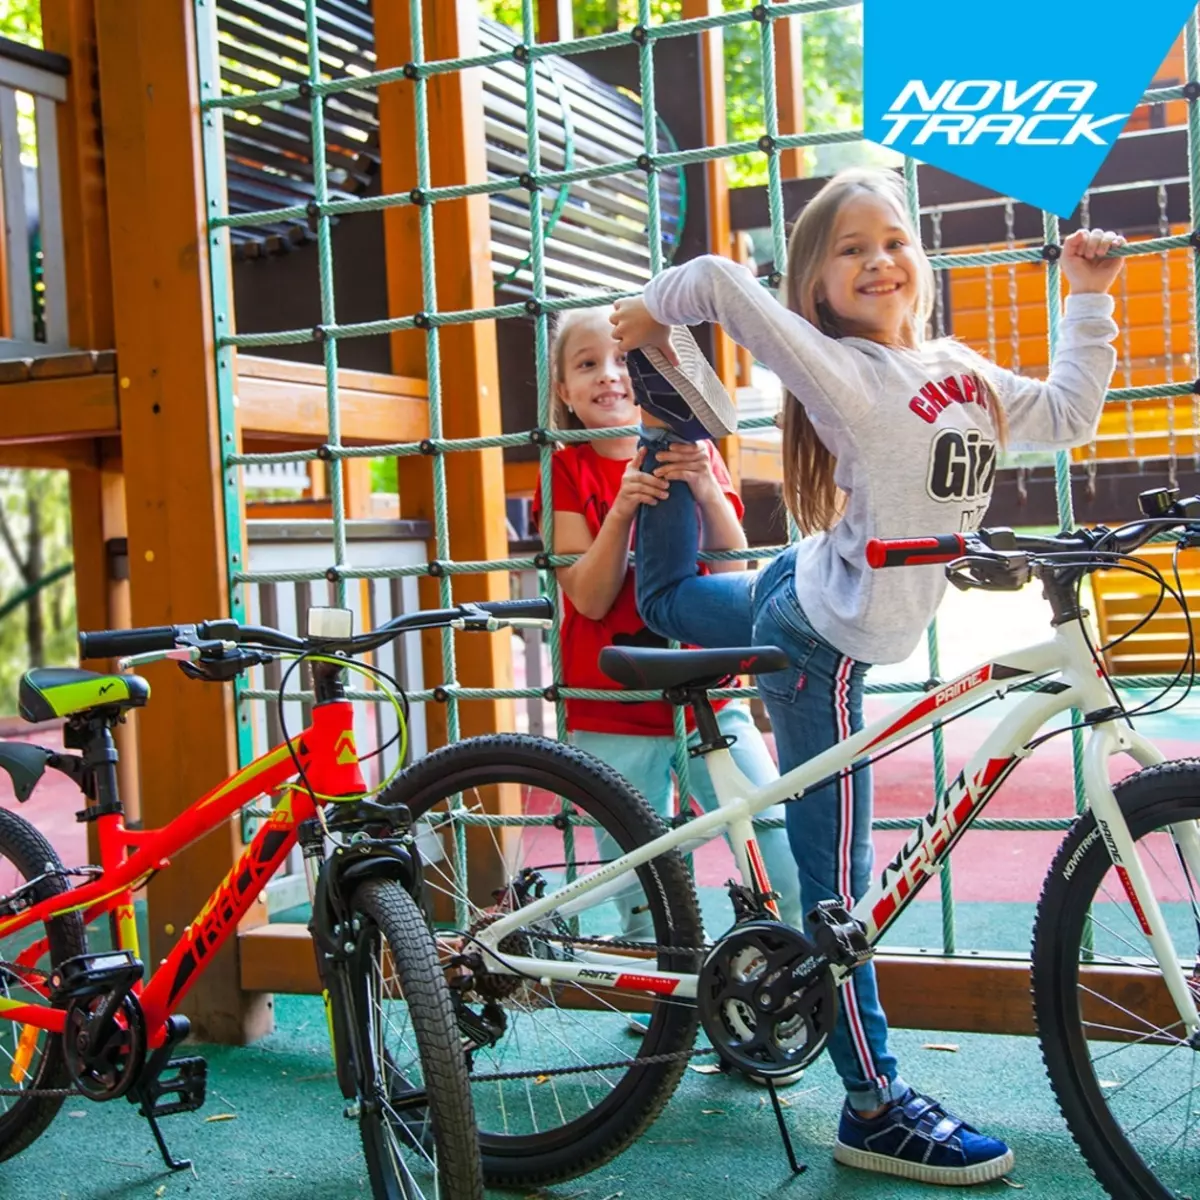 Новак Велосипеди: TG-20 Детски велосипеди и модели 12-14 и 16-18 инчи, тркач и други модели 20372_7